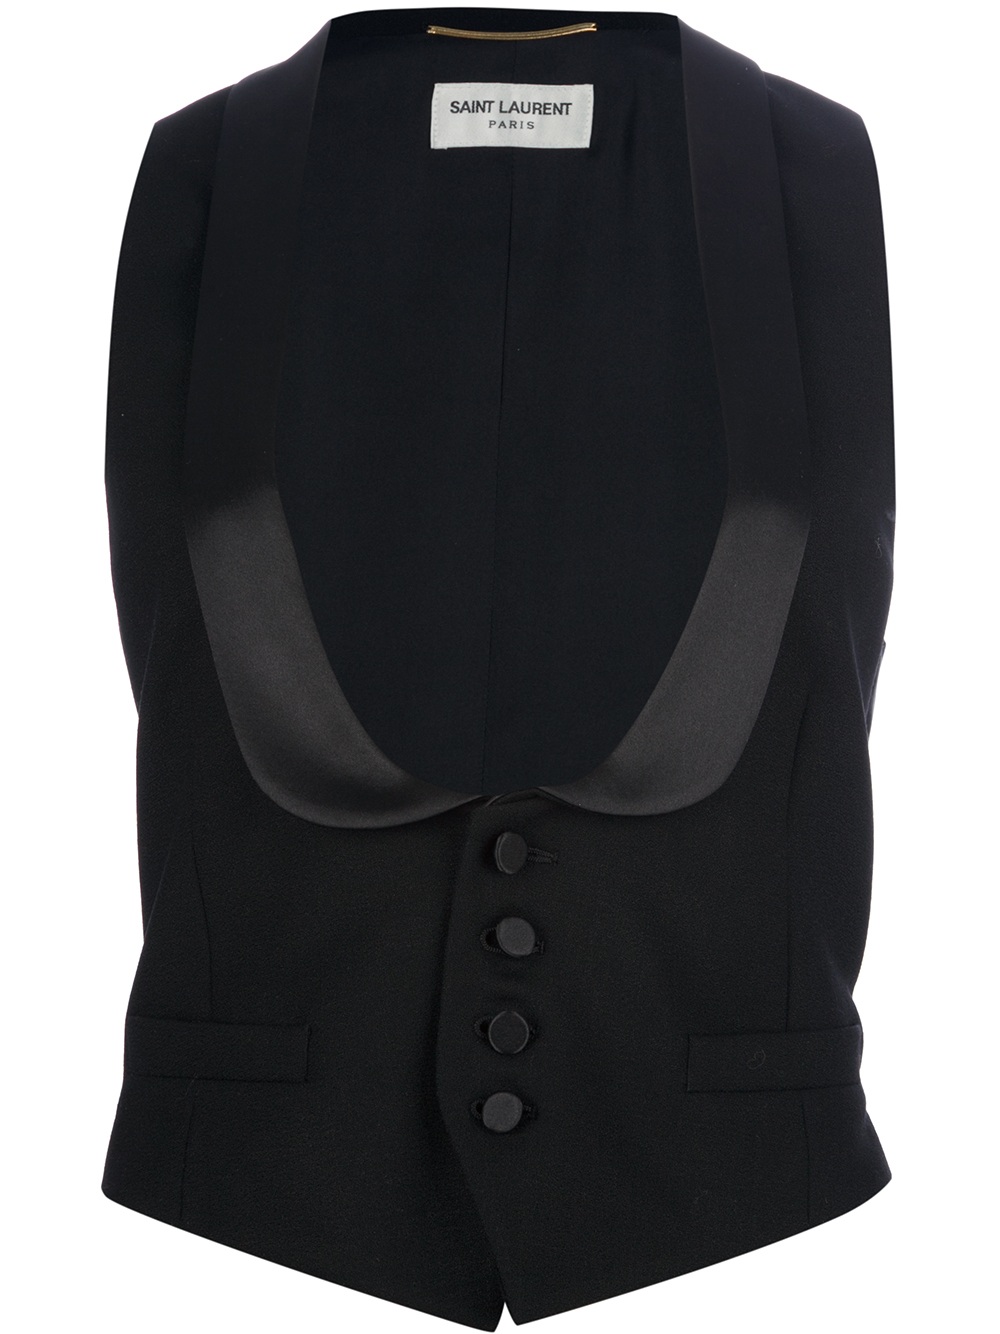 Saint Laurent Contrast Shawl Collar Waistcoat in Black | Lyst